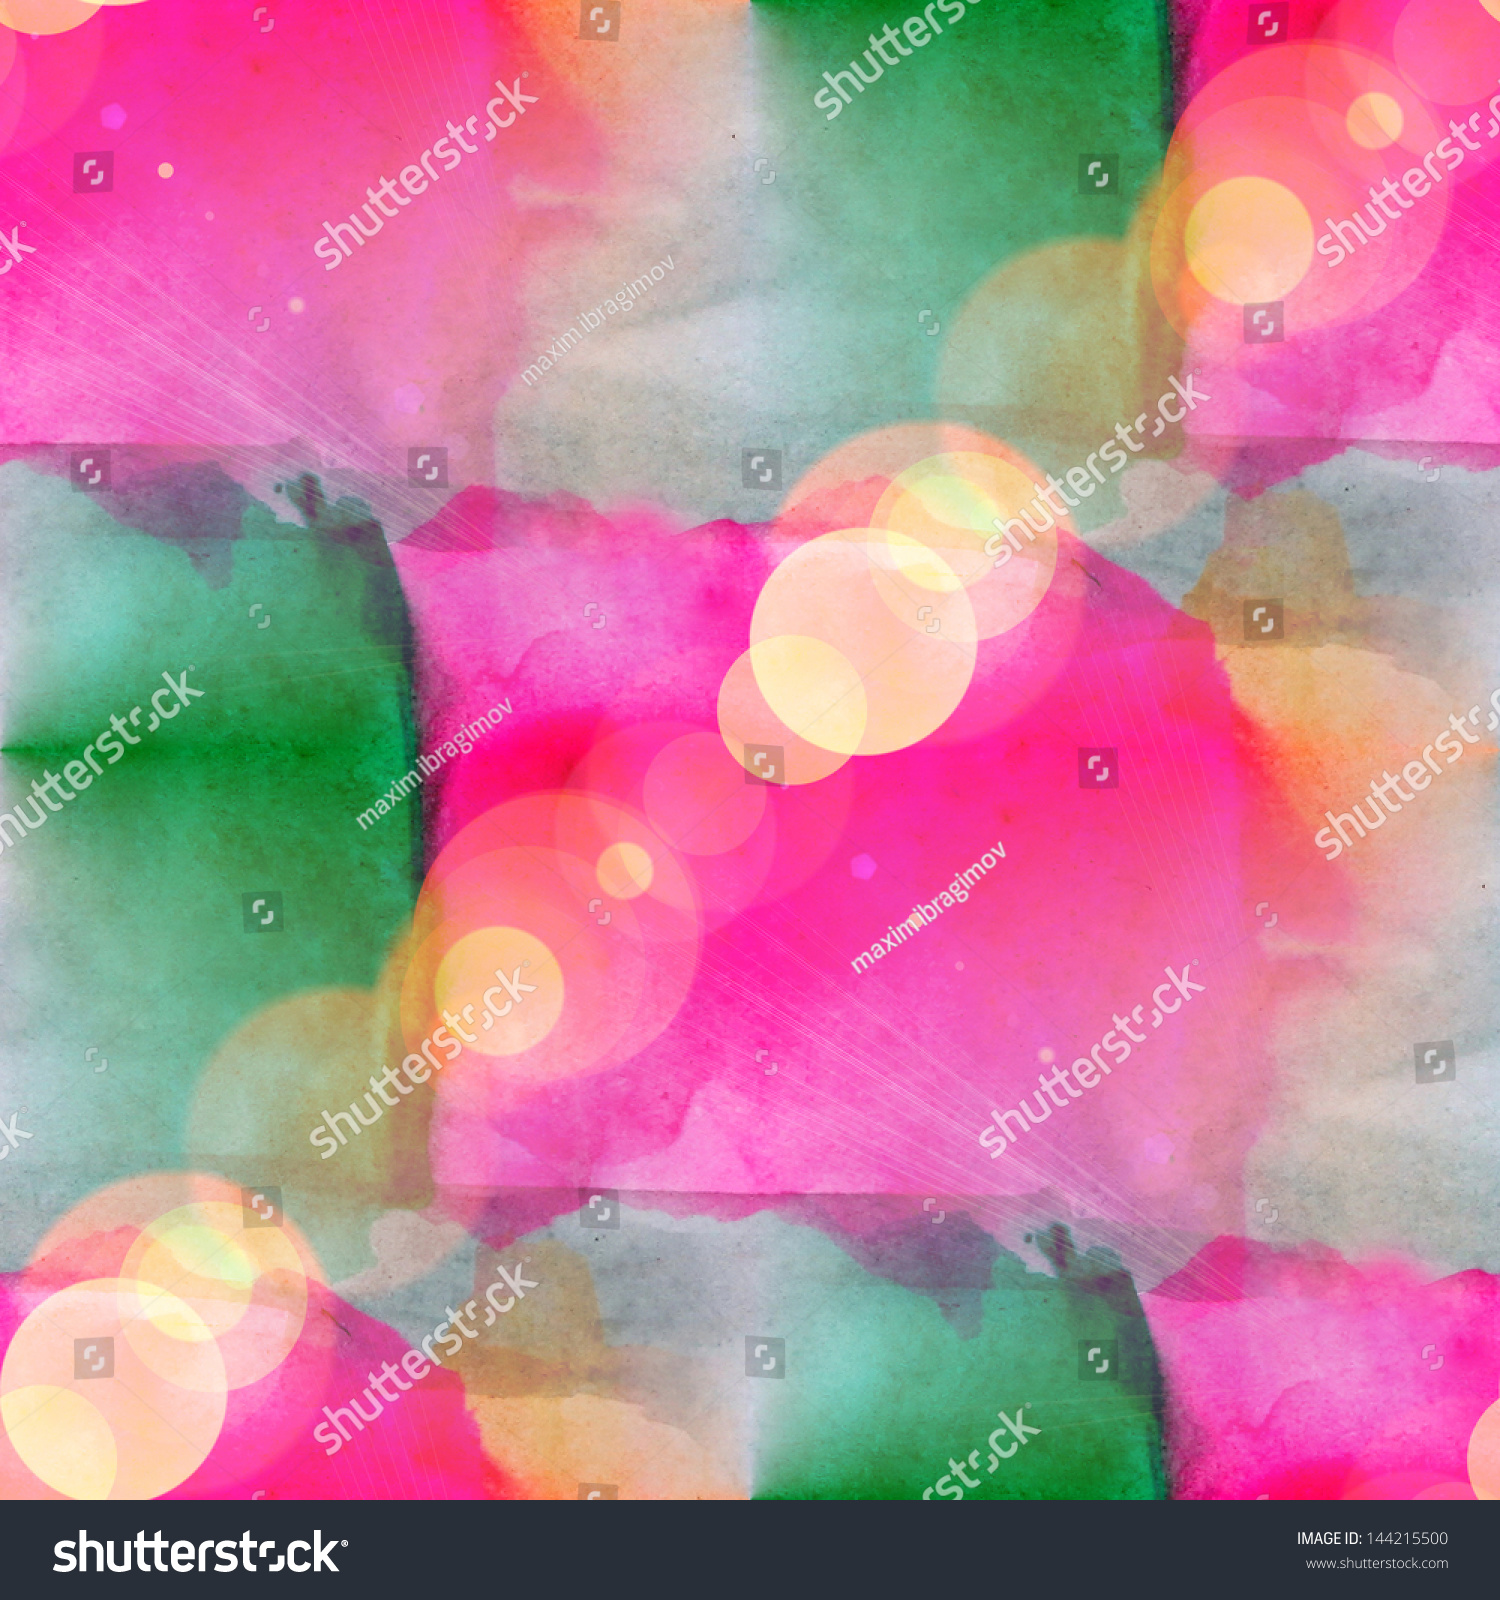 Bokeh Abstract Pink Green Watercolor Seamless Stock Illustration ...